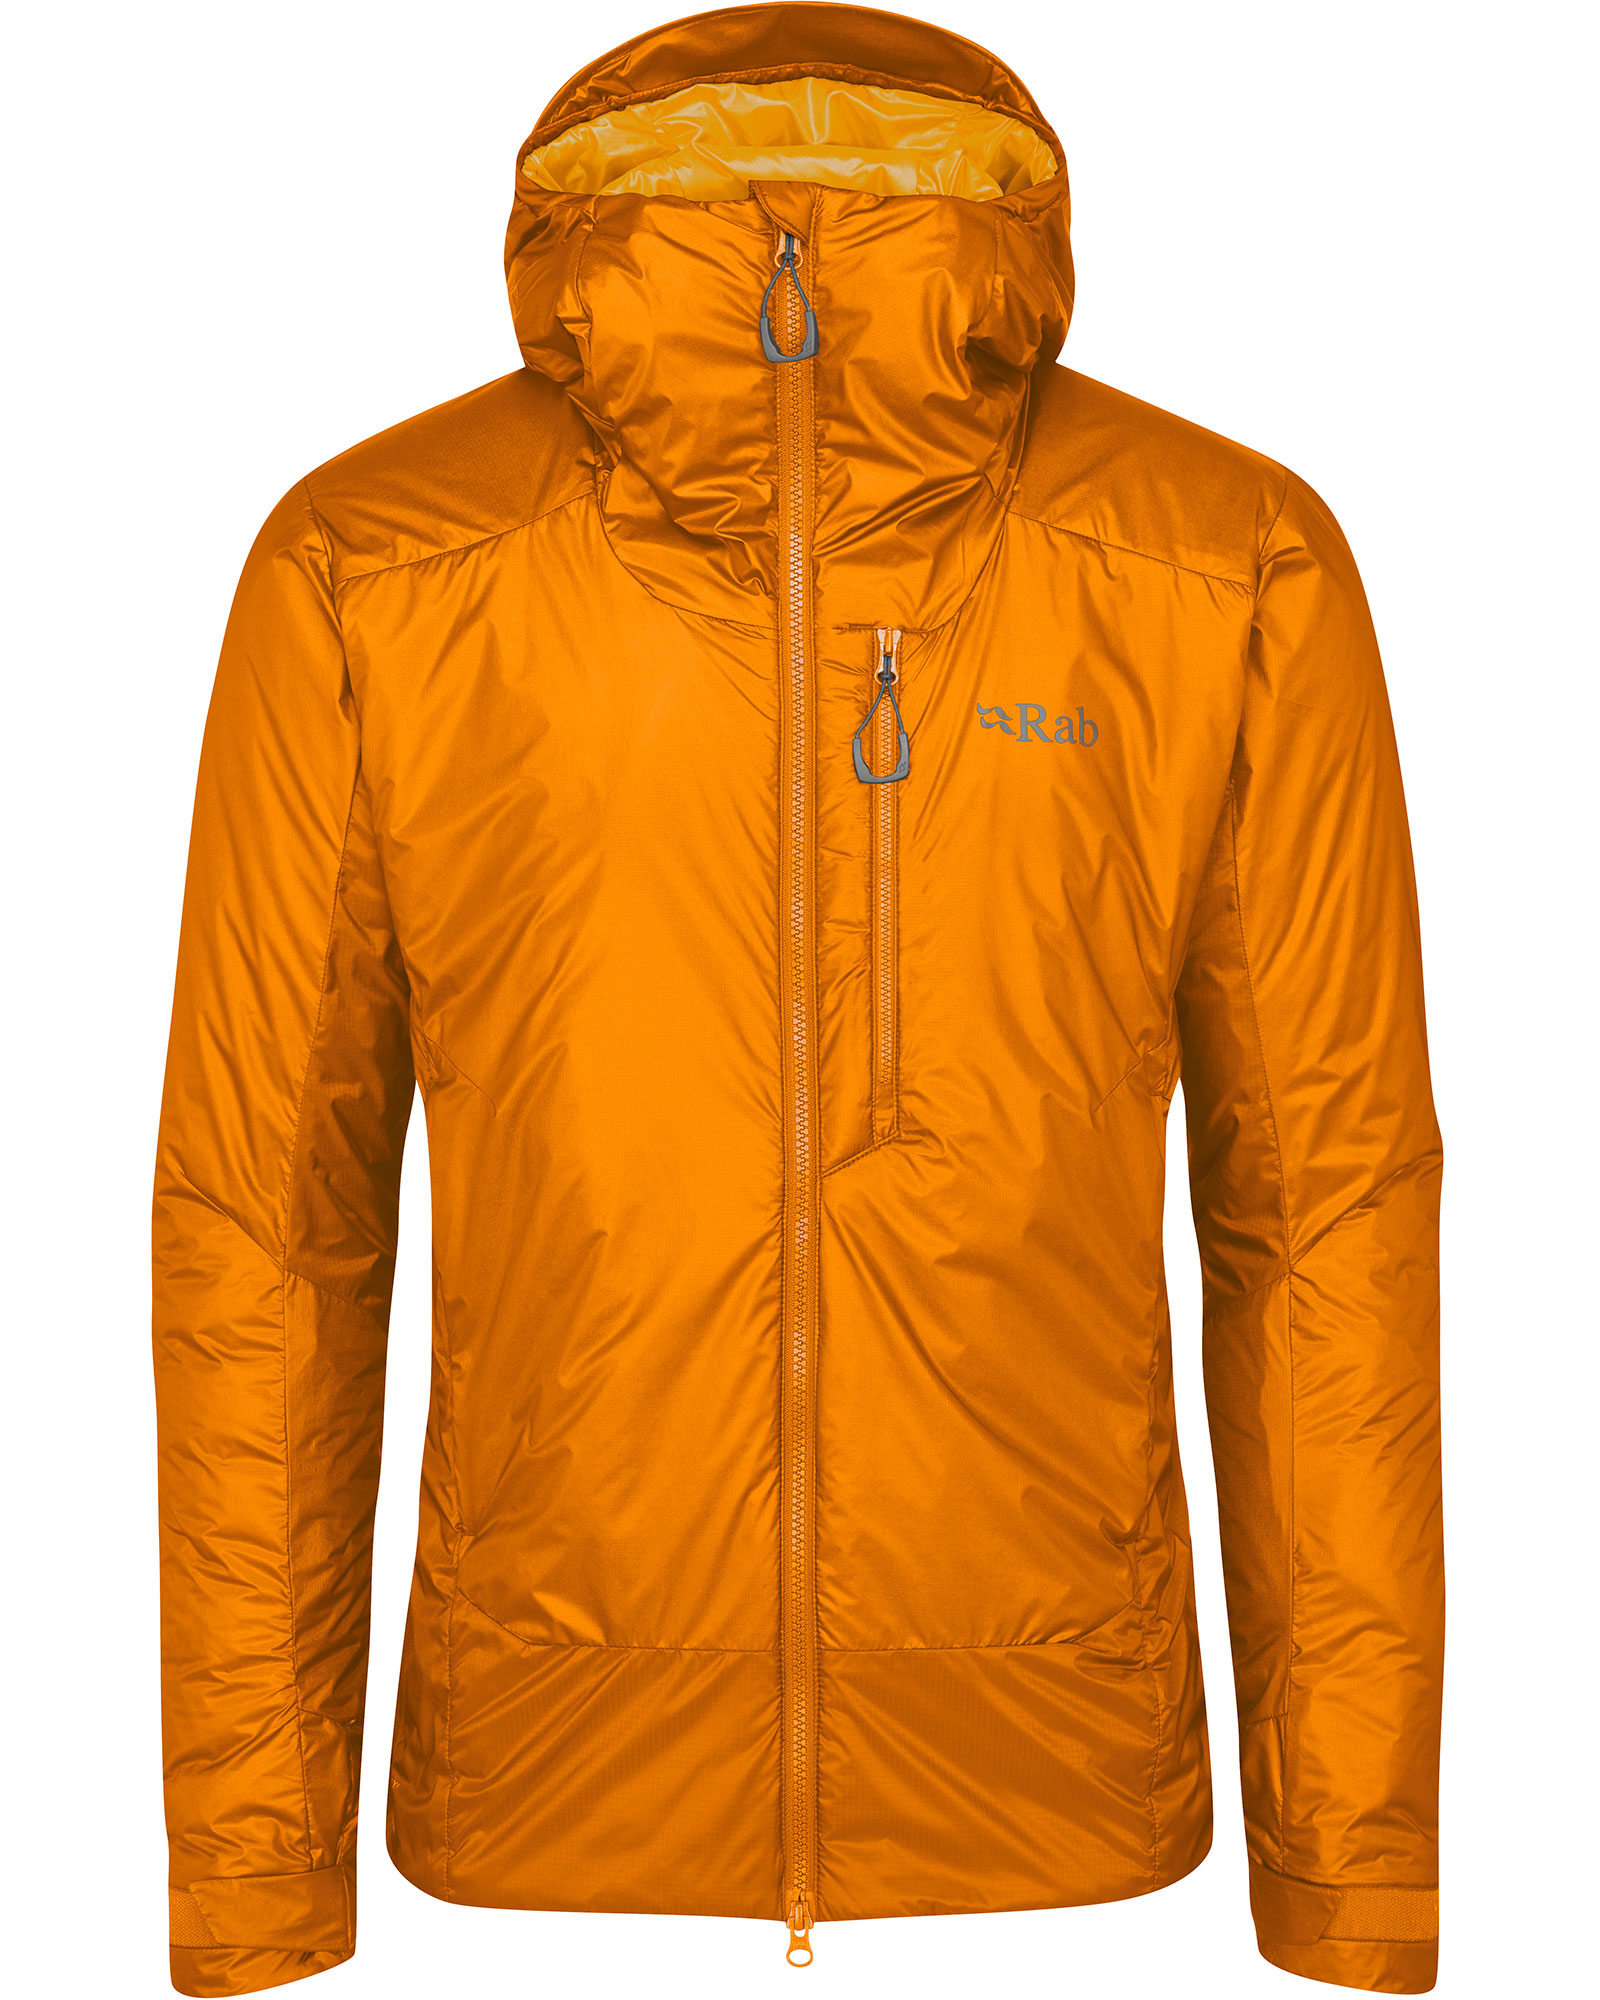 Rab Generator Alpine Men’s Insulated Jacket - Marmalade S